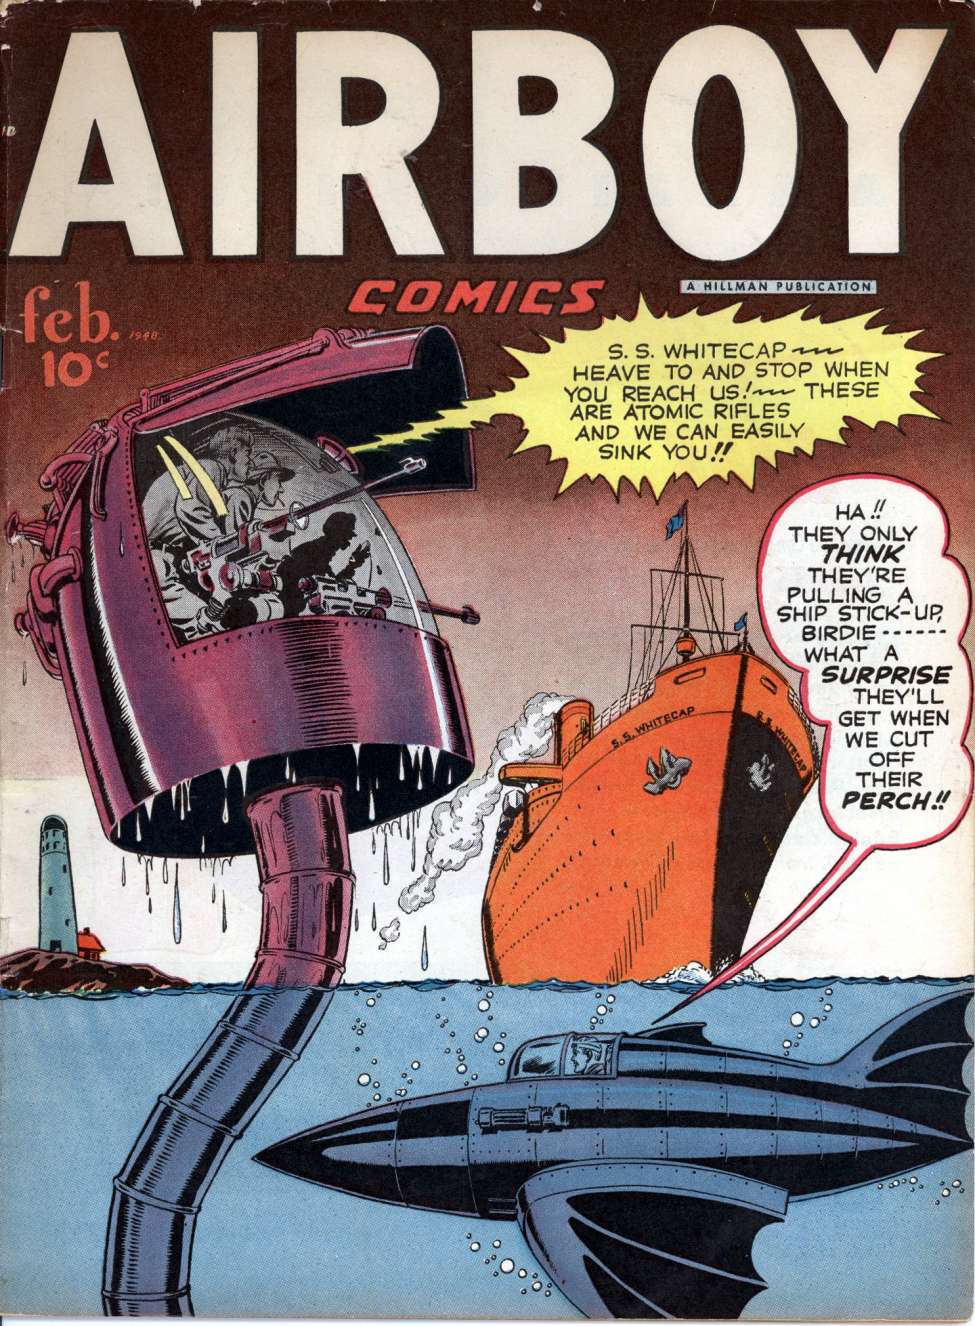 Comic Book Cover For Airboy Comics v5 1 (alt)